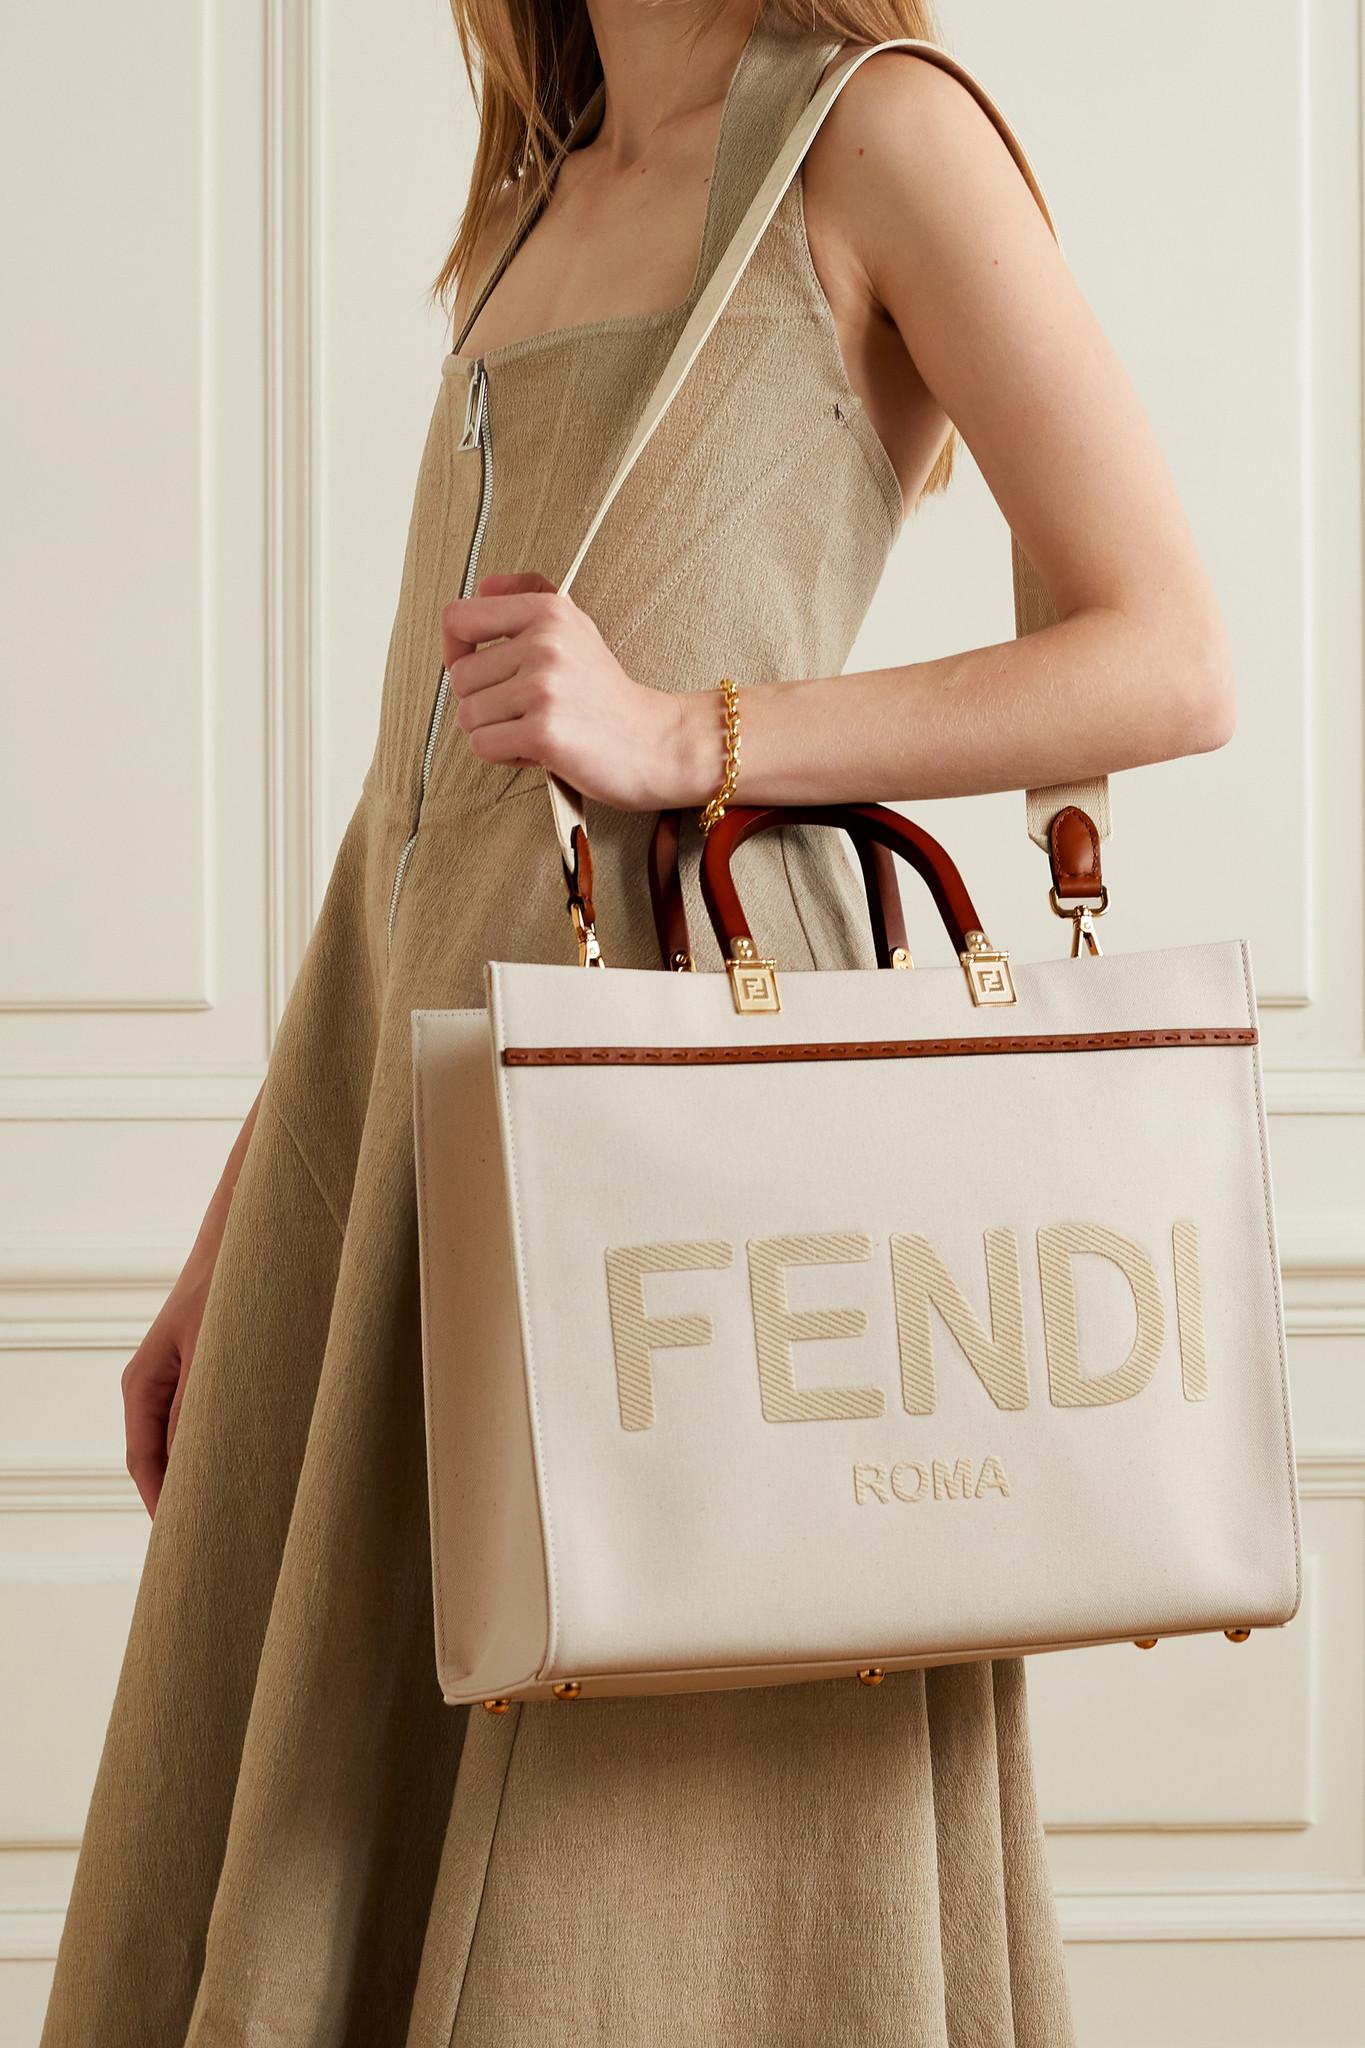 Fendi Sunshine Medium Leather Tote Bag